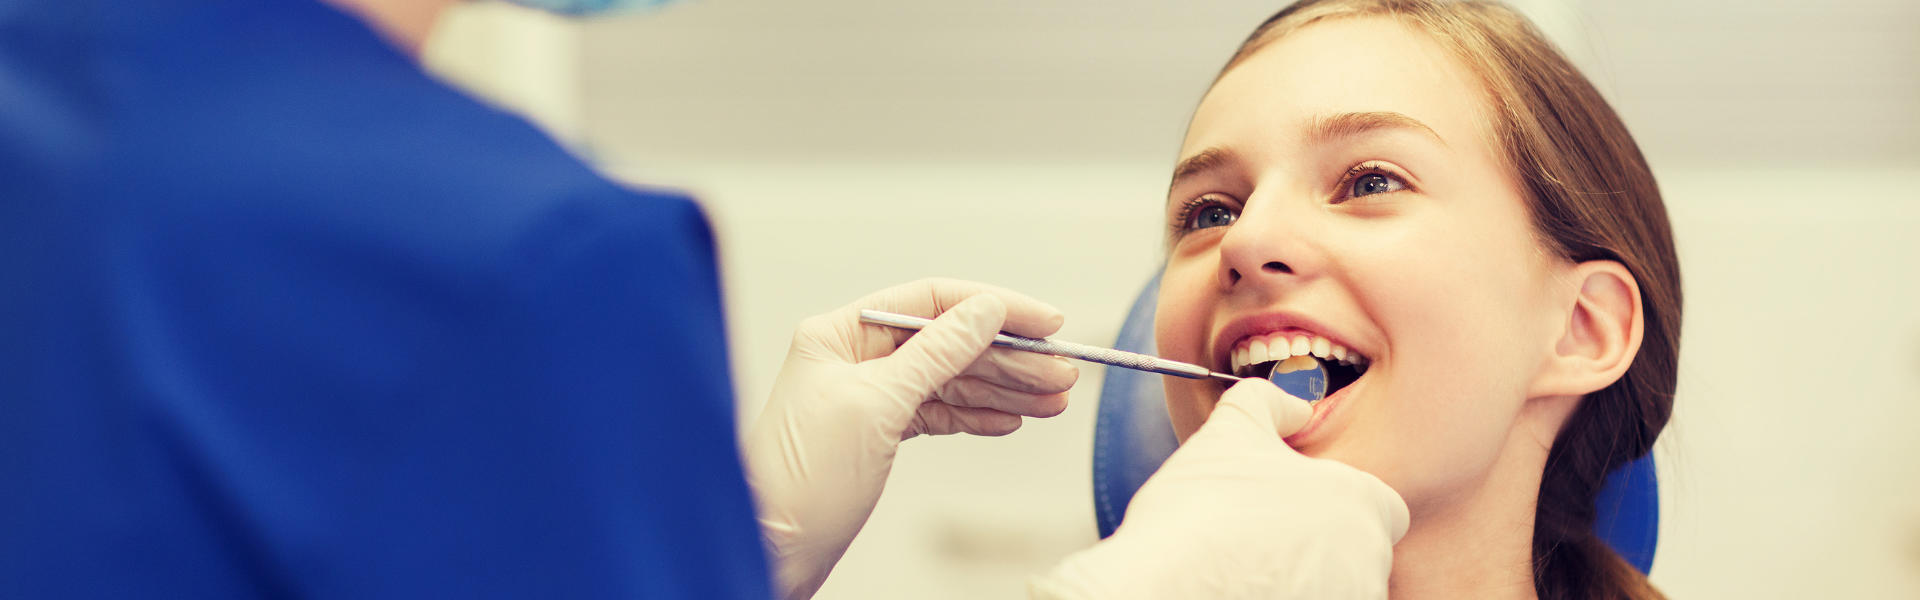 Girl in a dental chair during a dental checkup